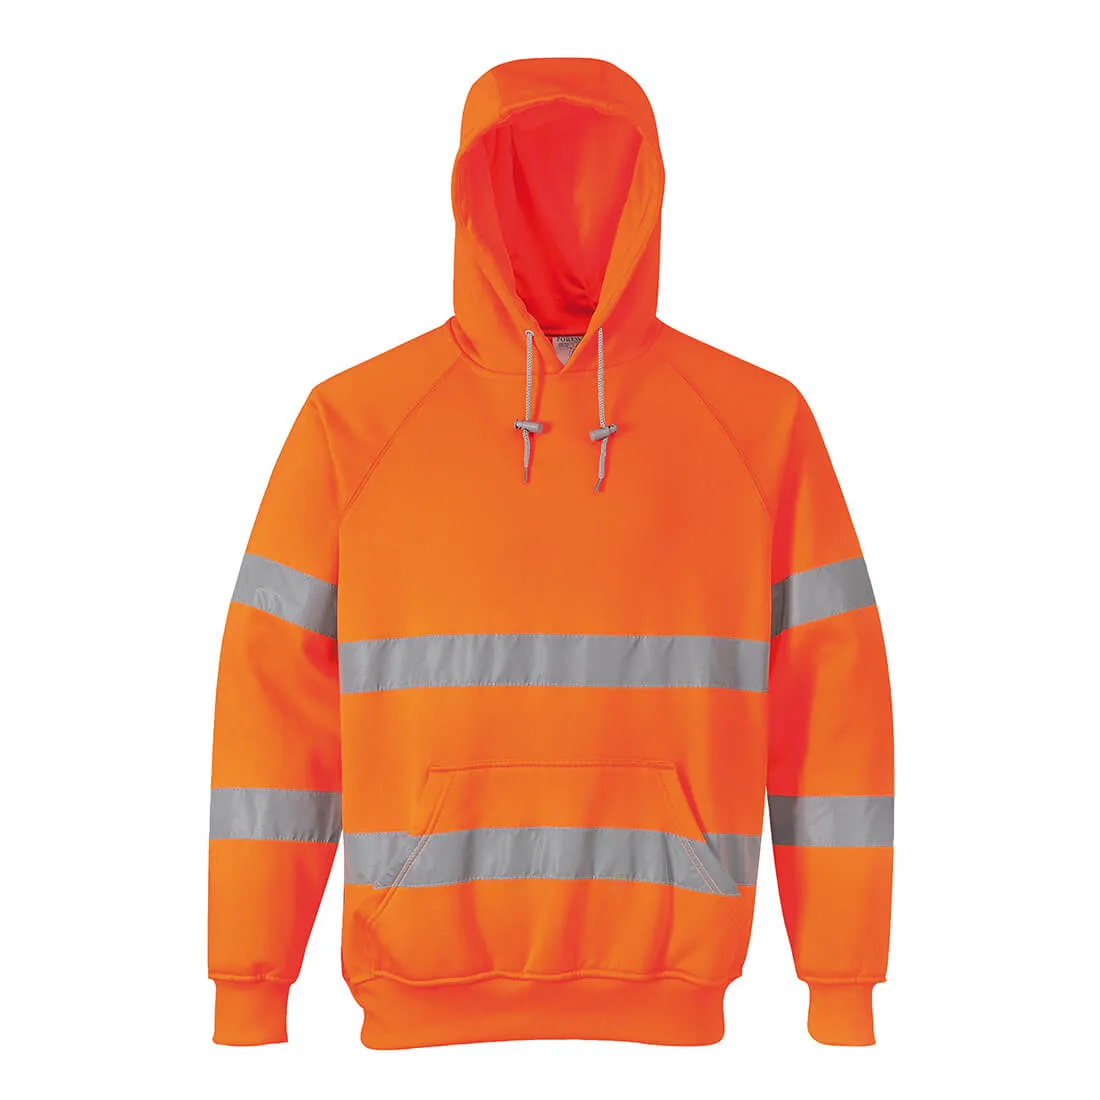 Portwest Class 3 Hi Vis Hooded Sweatshirt - Orange, 2XL